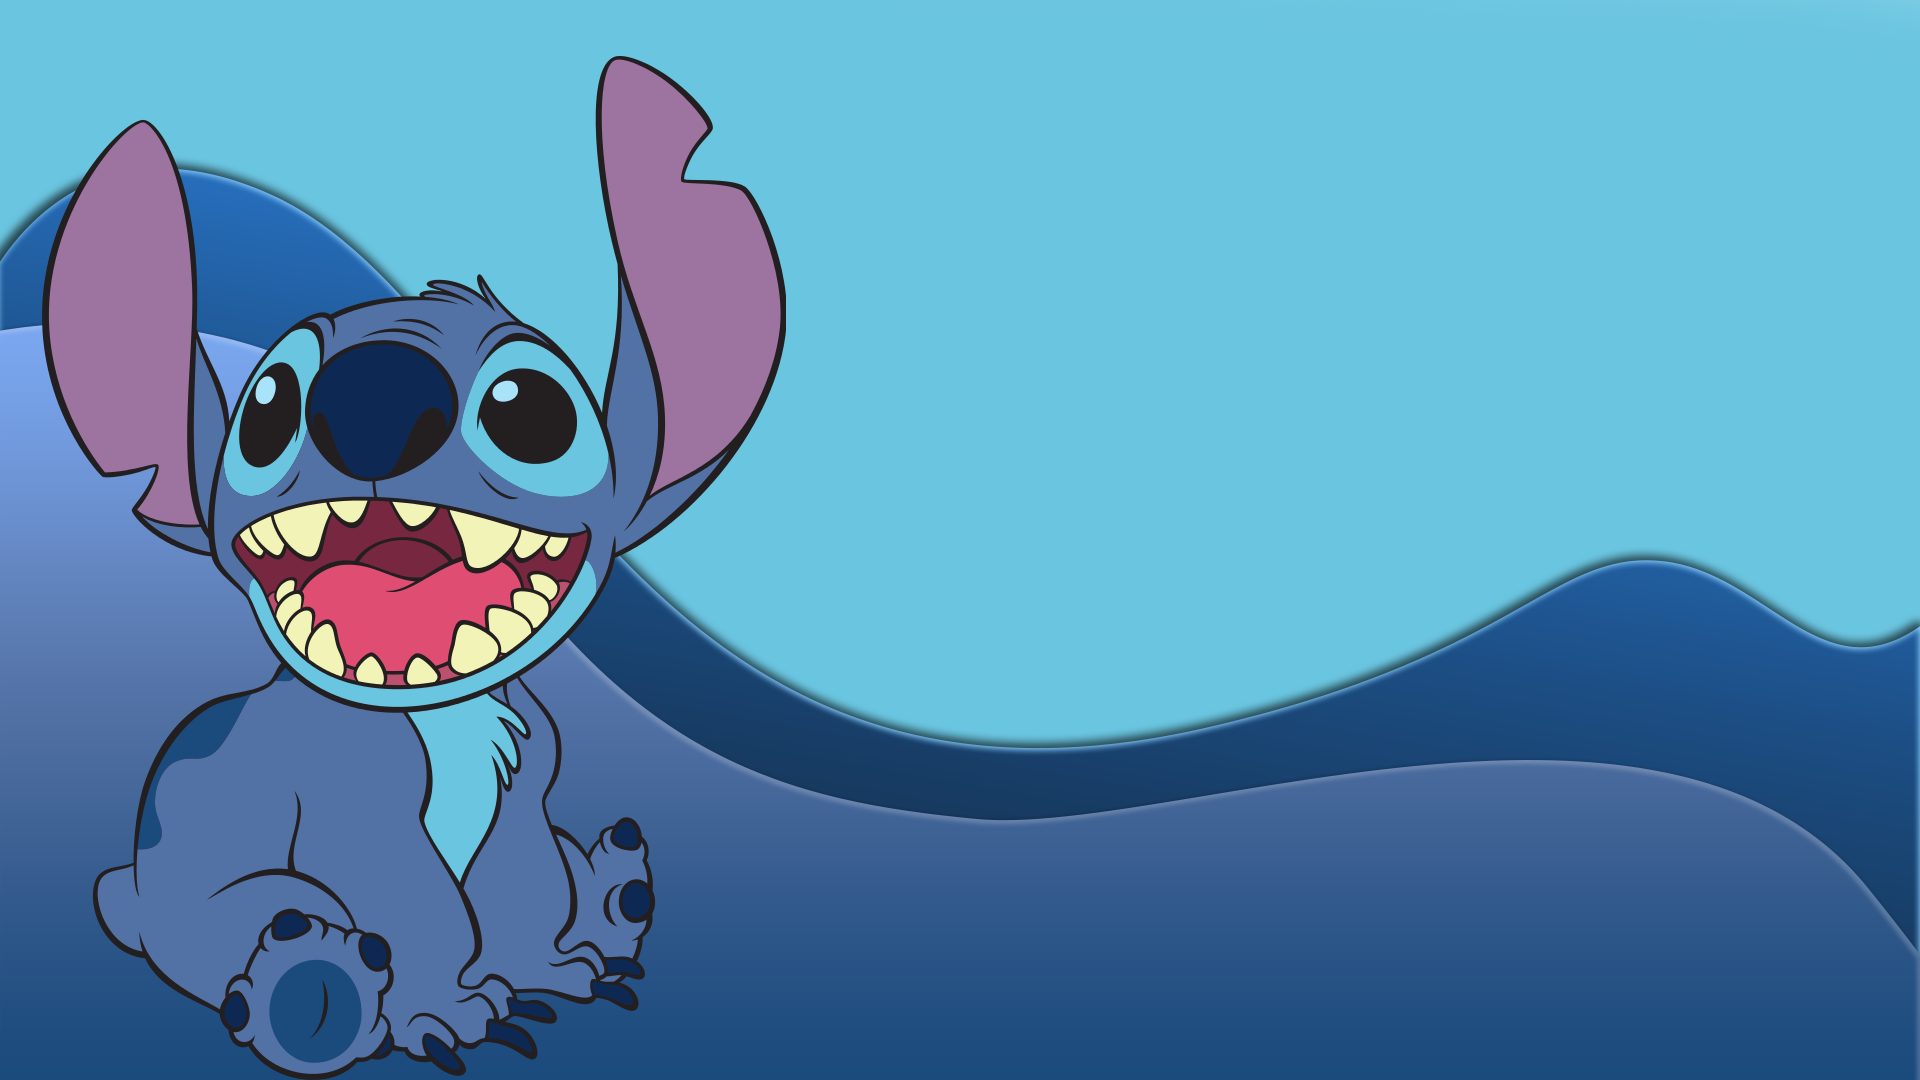 Movie Lilo & Stitch HD Wallpaper | Background Image